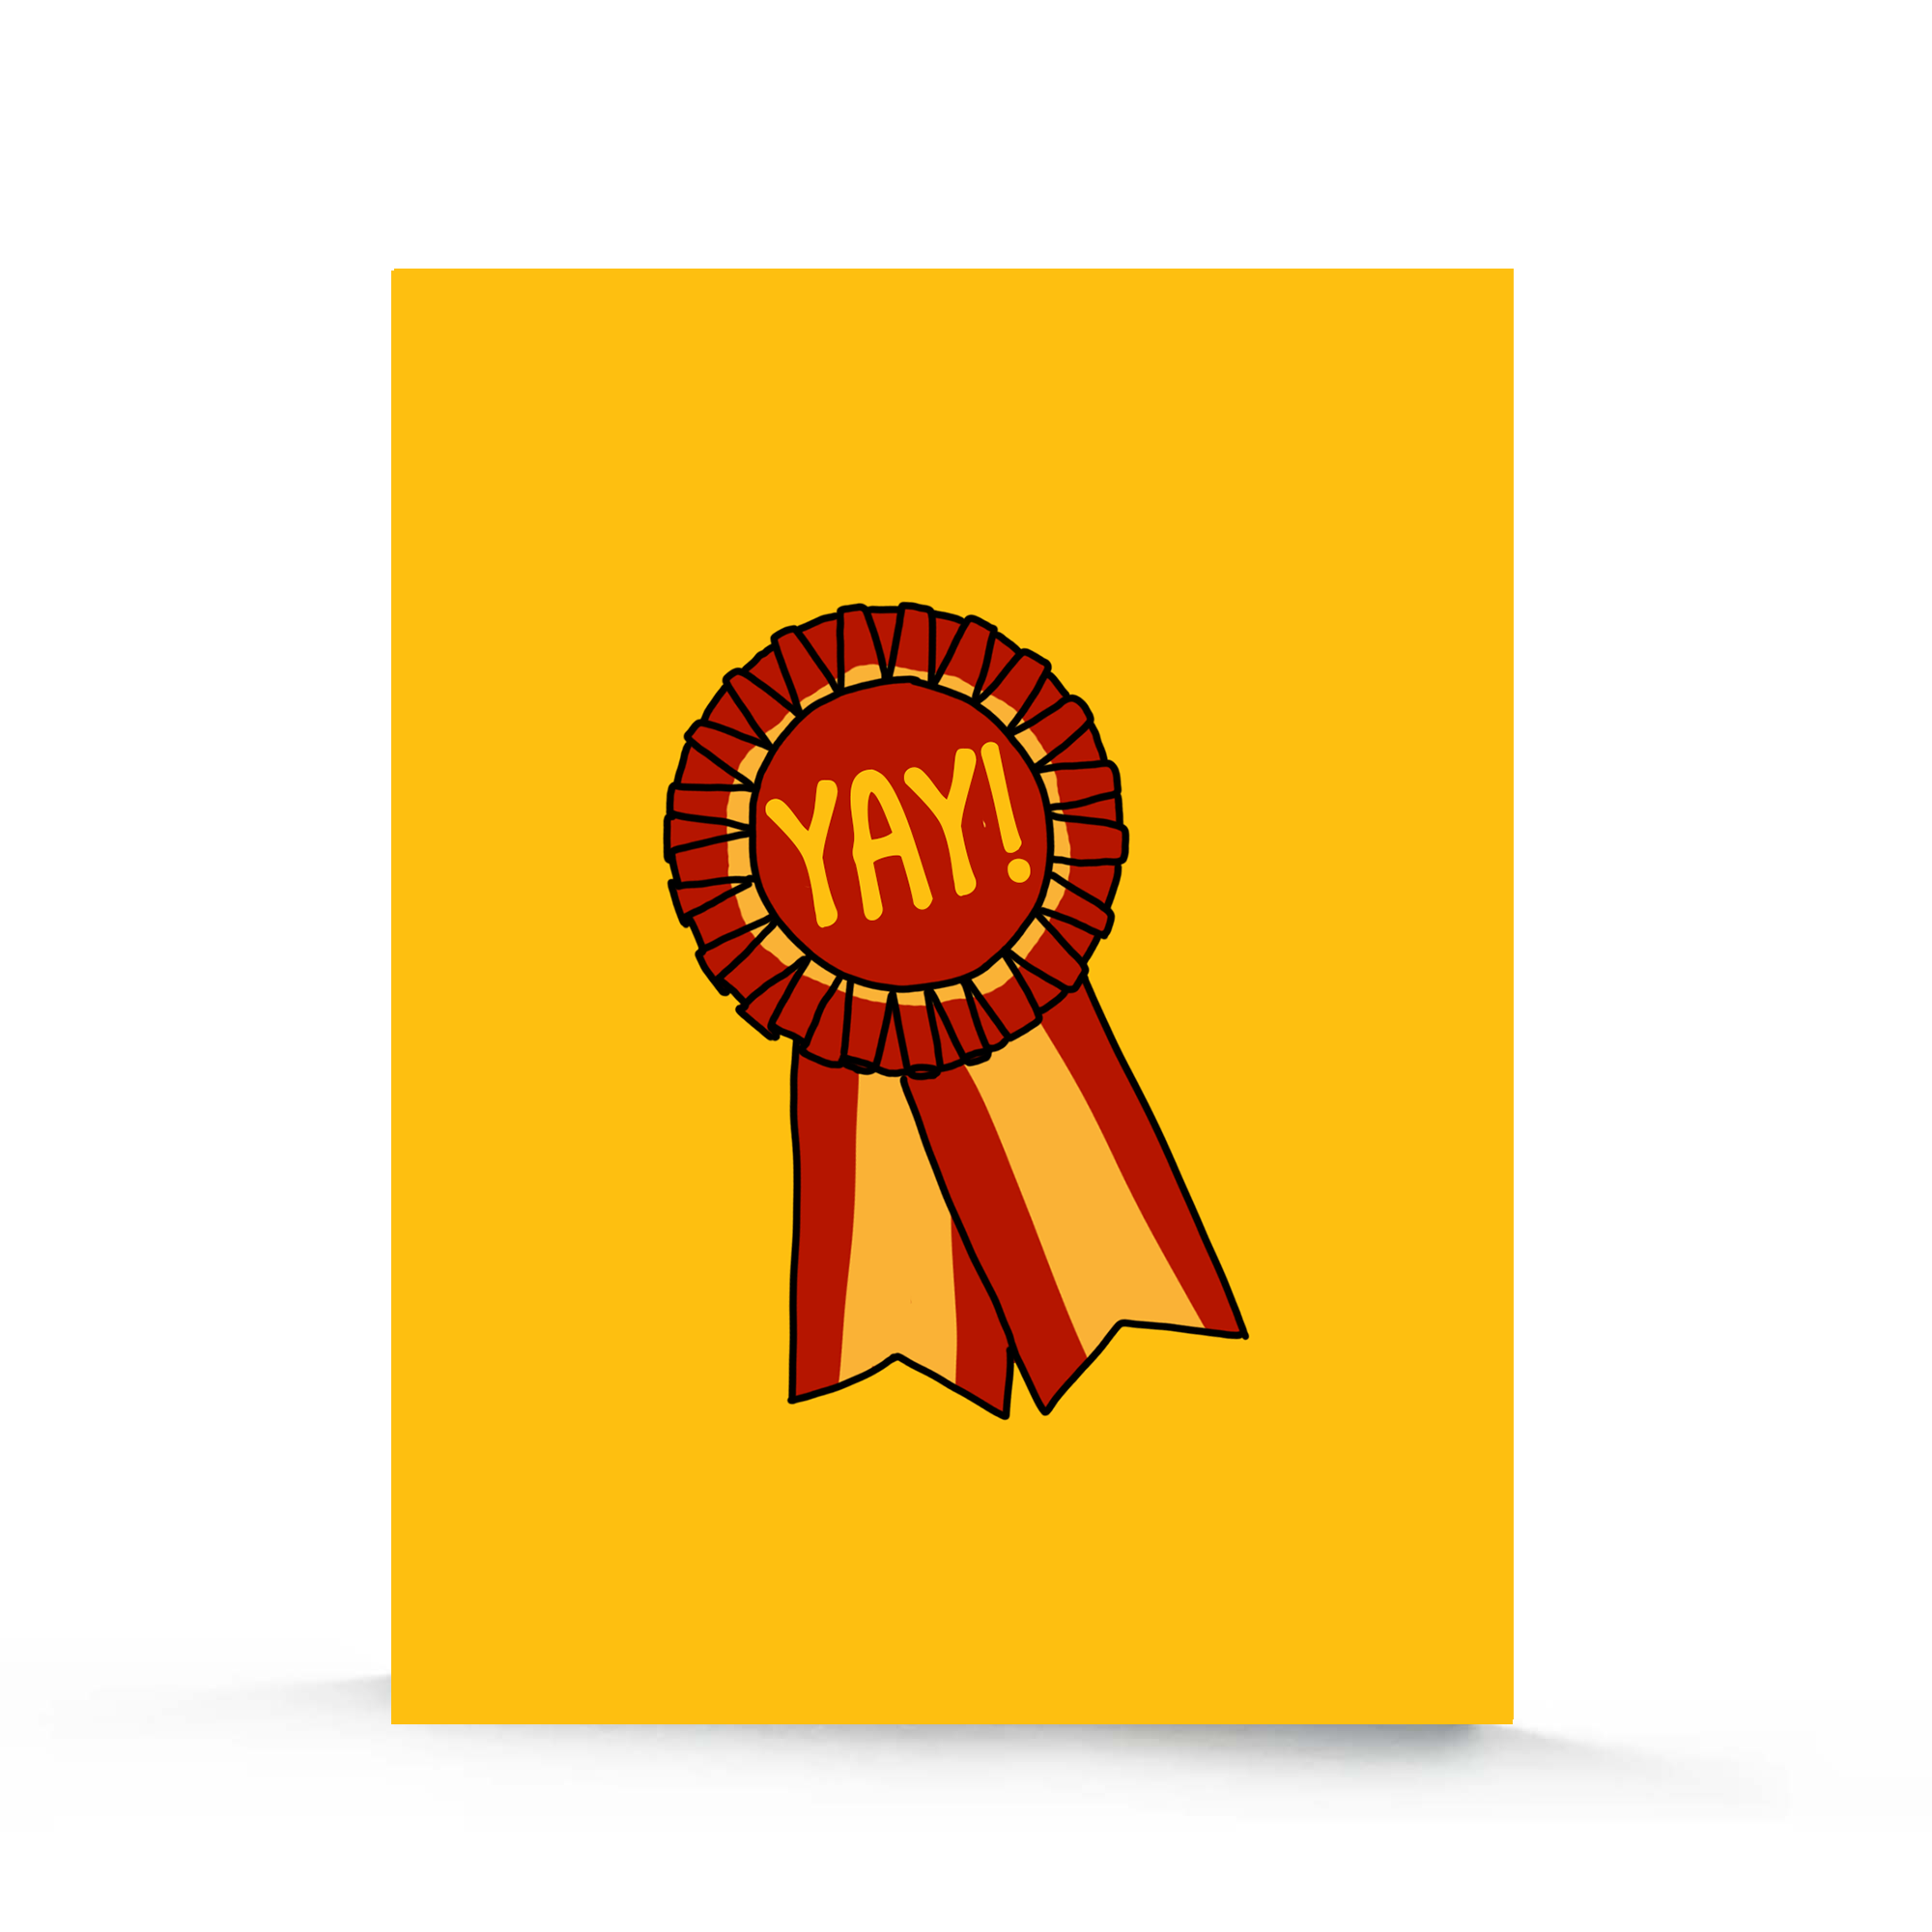 congratulations cards for achievement